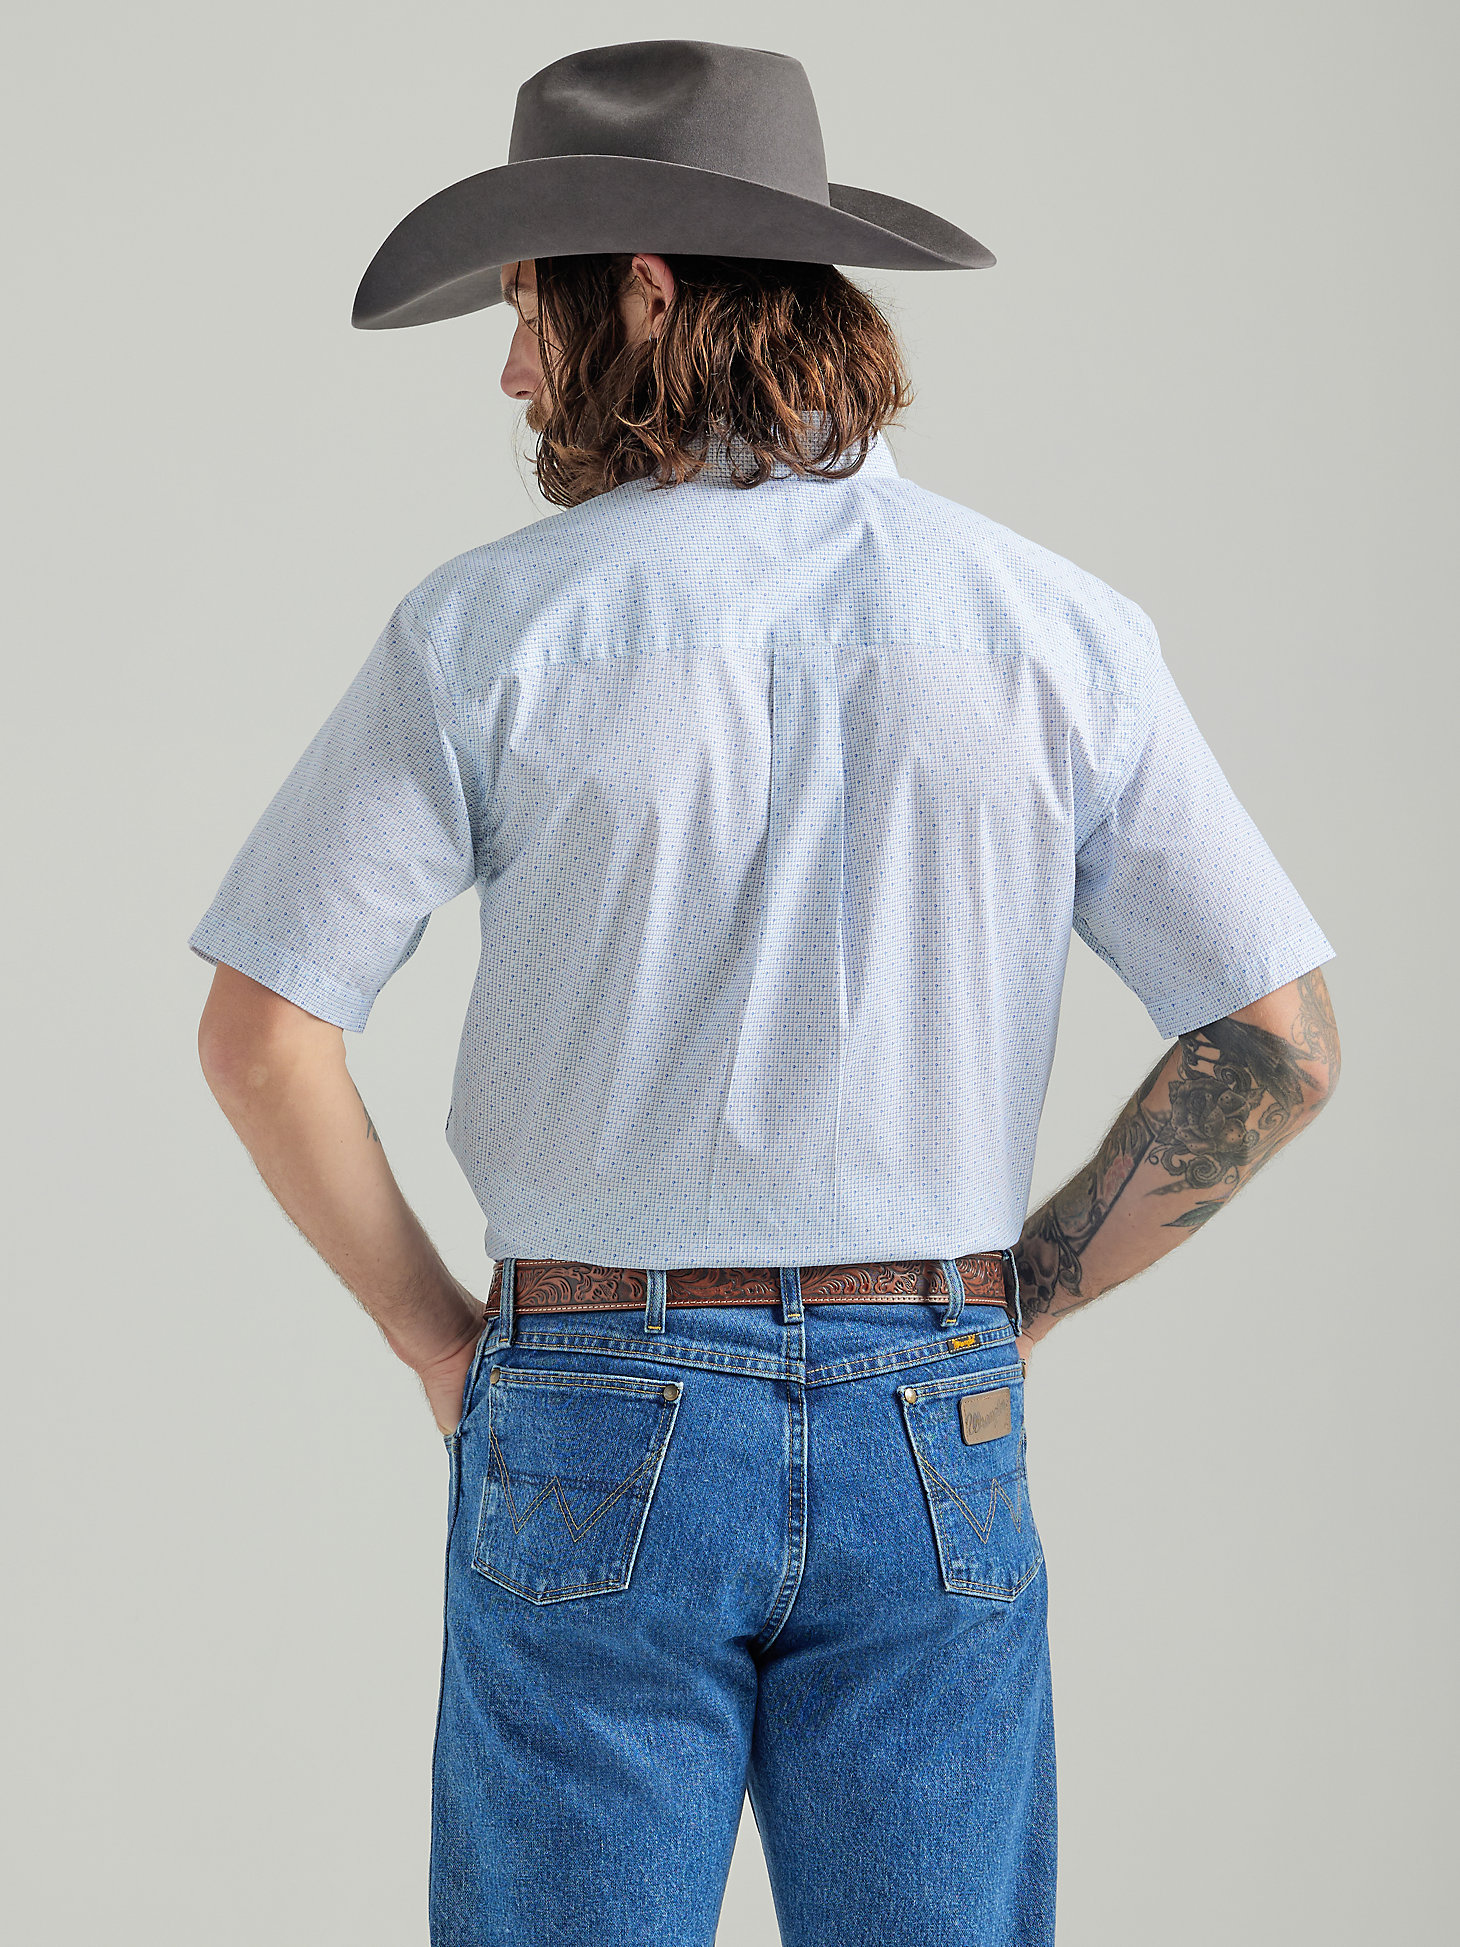 Men's George Strait® Short Sleeve Button Down One Pocket Print Shirt in Baby Blue alternative view 1